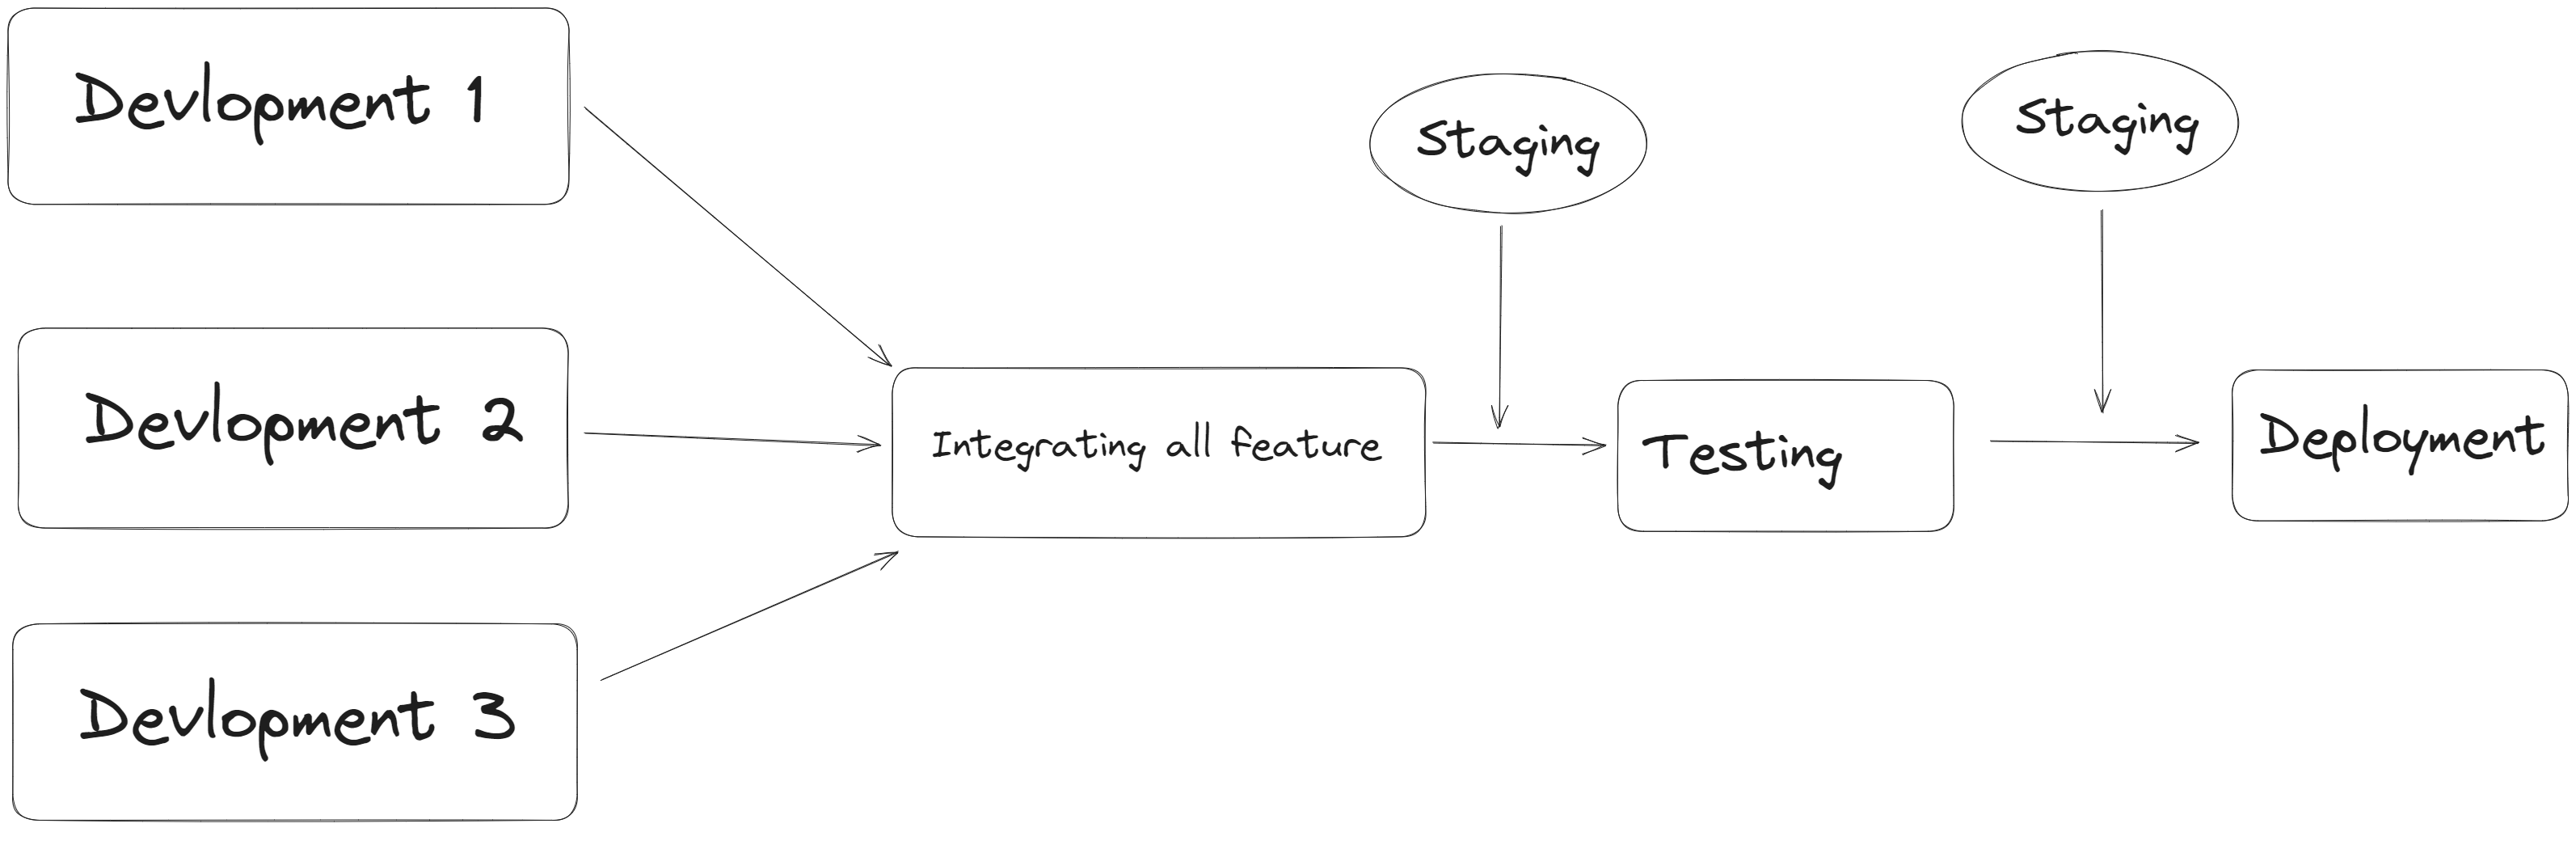 Development -> Integration ->Testing -> Deployment